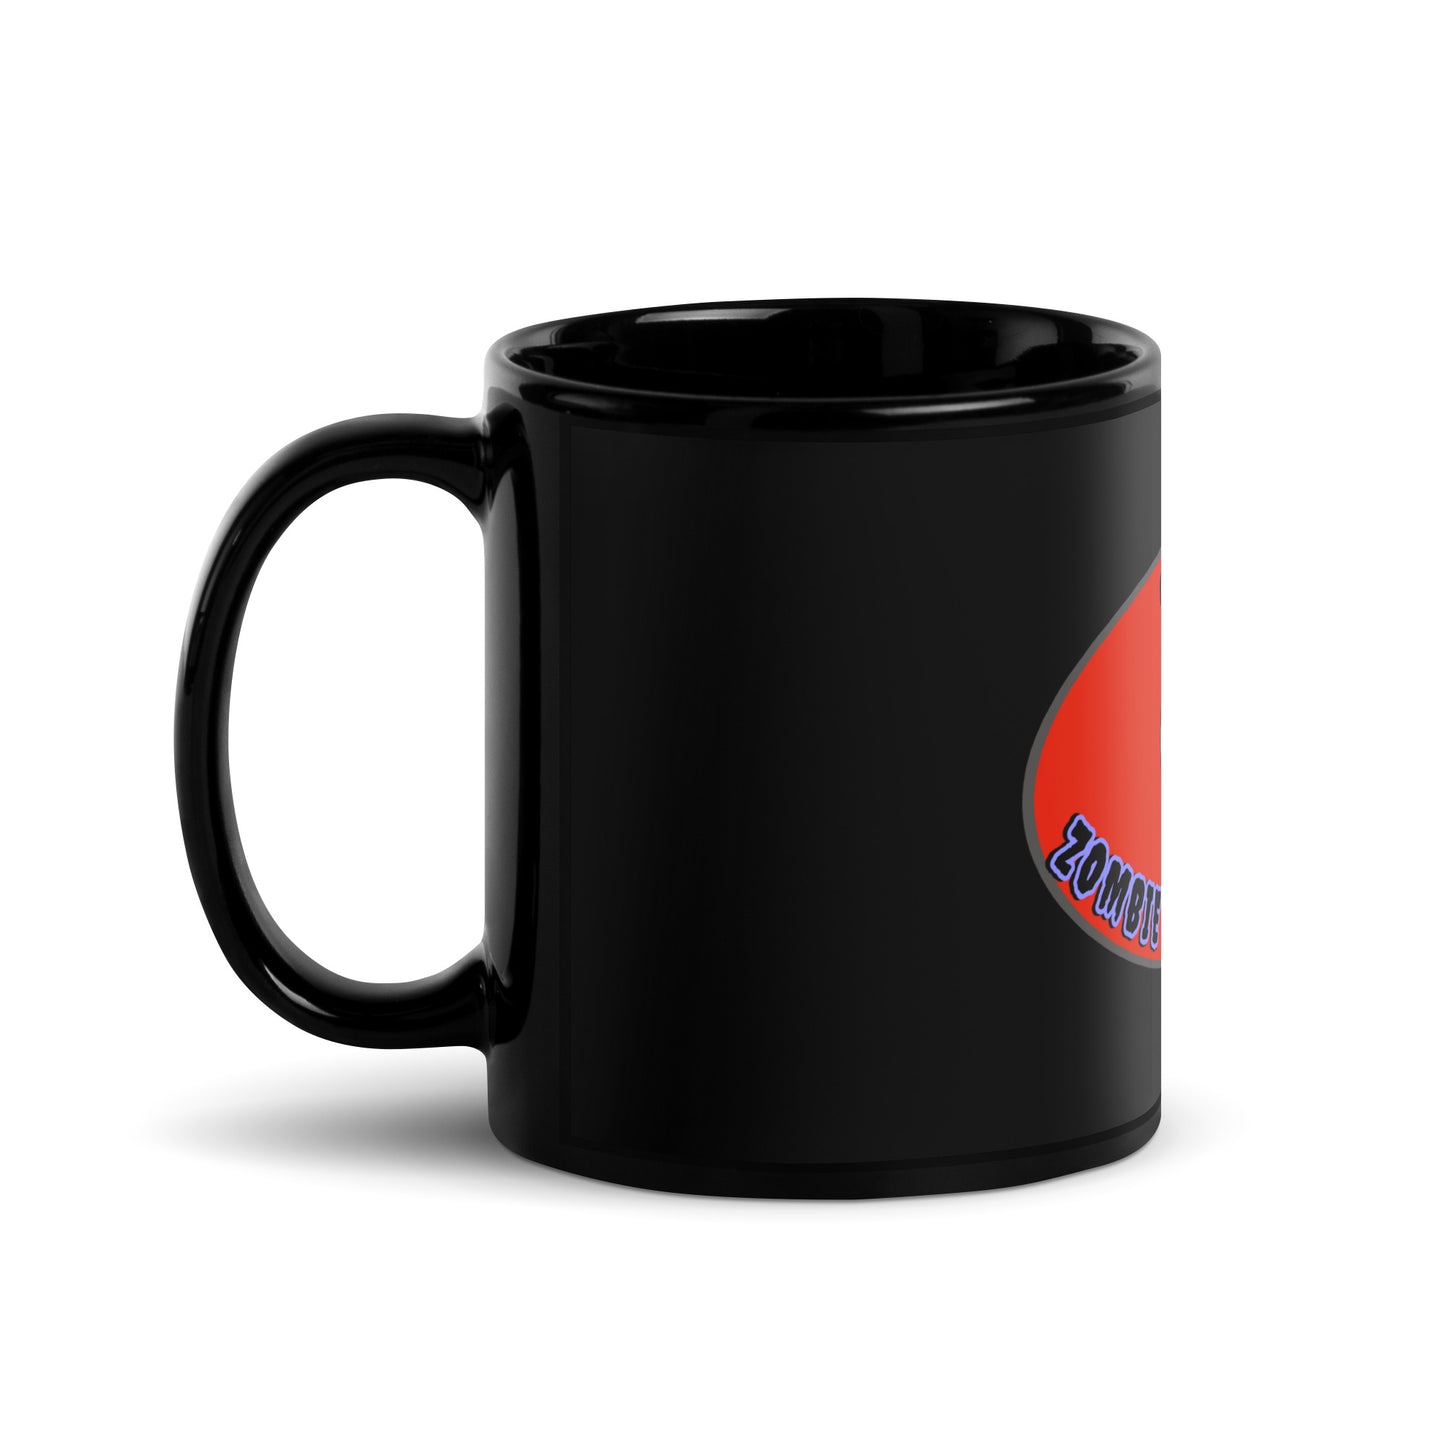 Black Glossy Mug - Sally's Classic logo